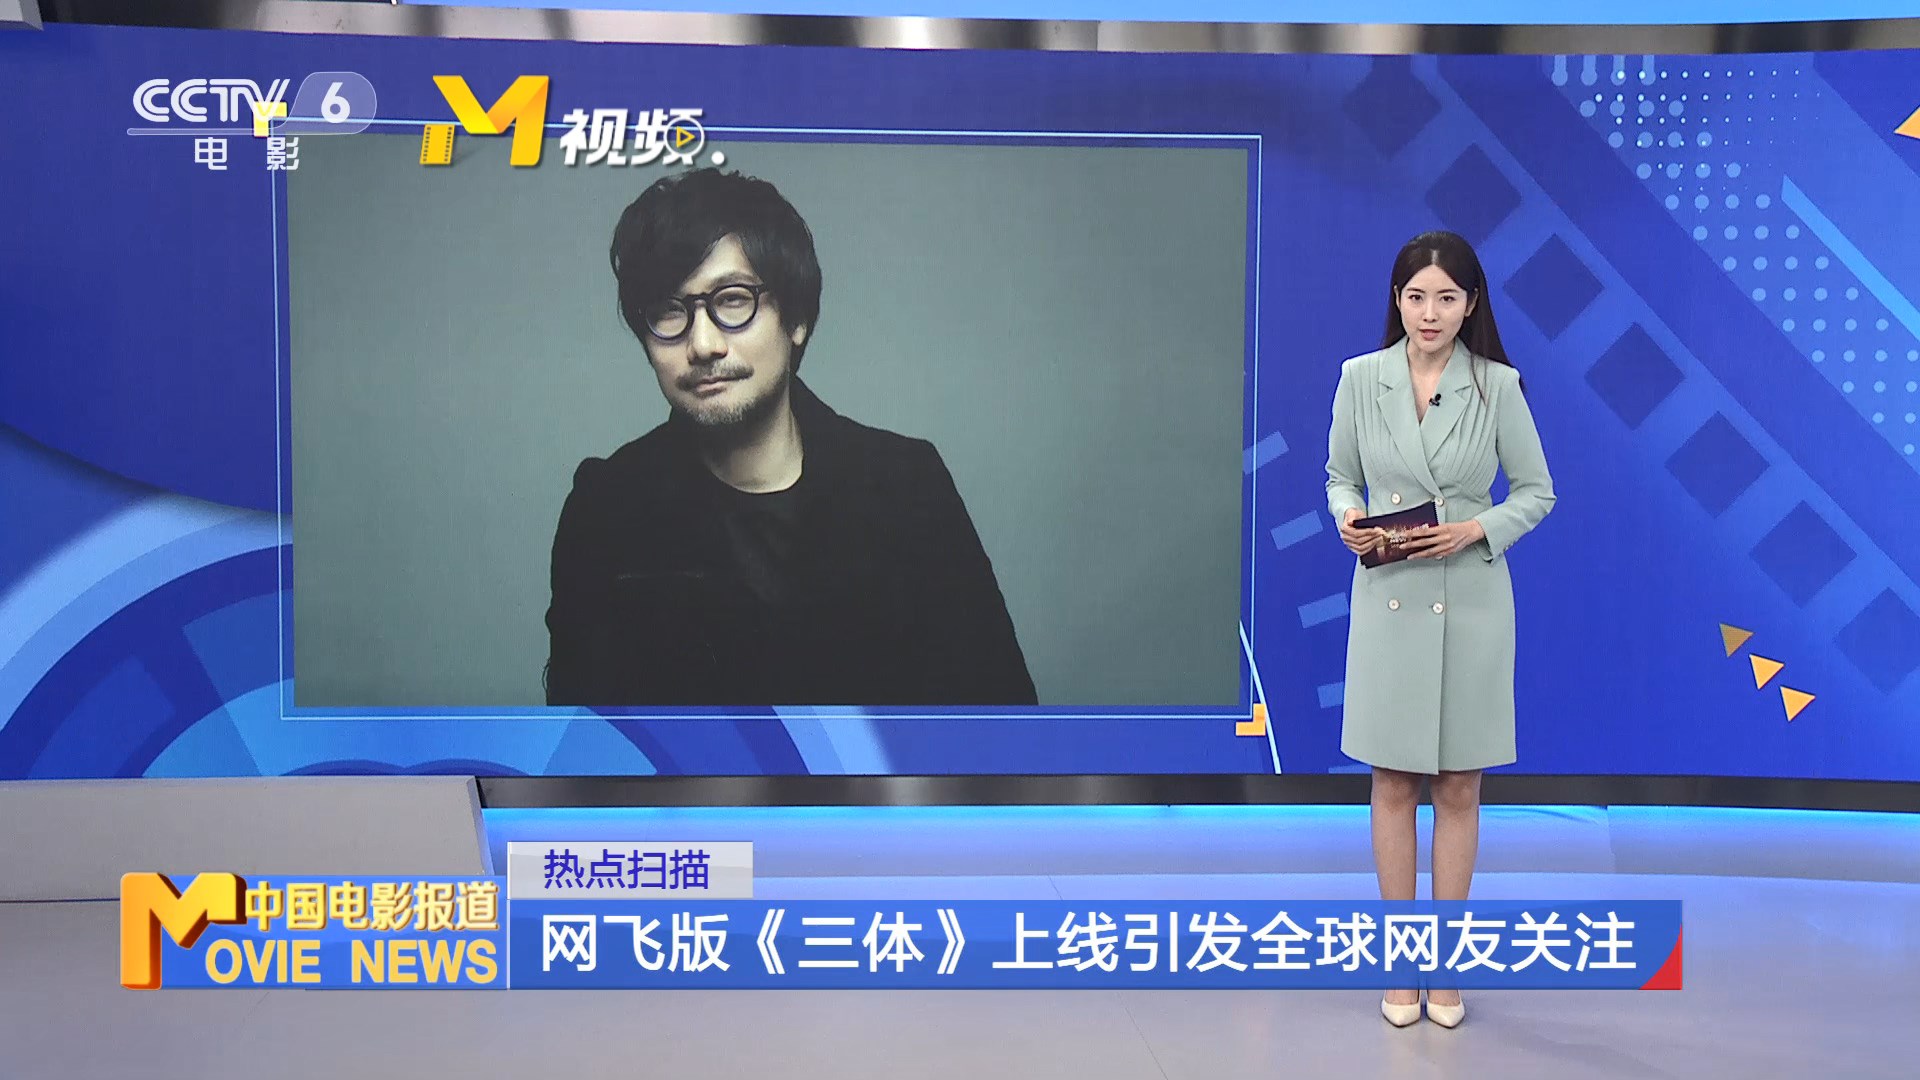 CCTV6报道网飞版《三体》引发全球网友关注 小岛秀夫登上央视